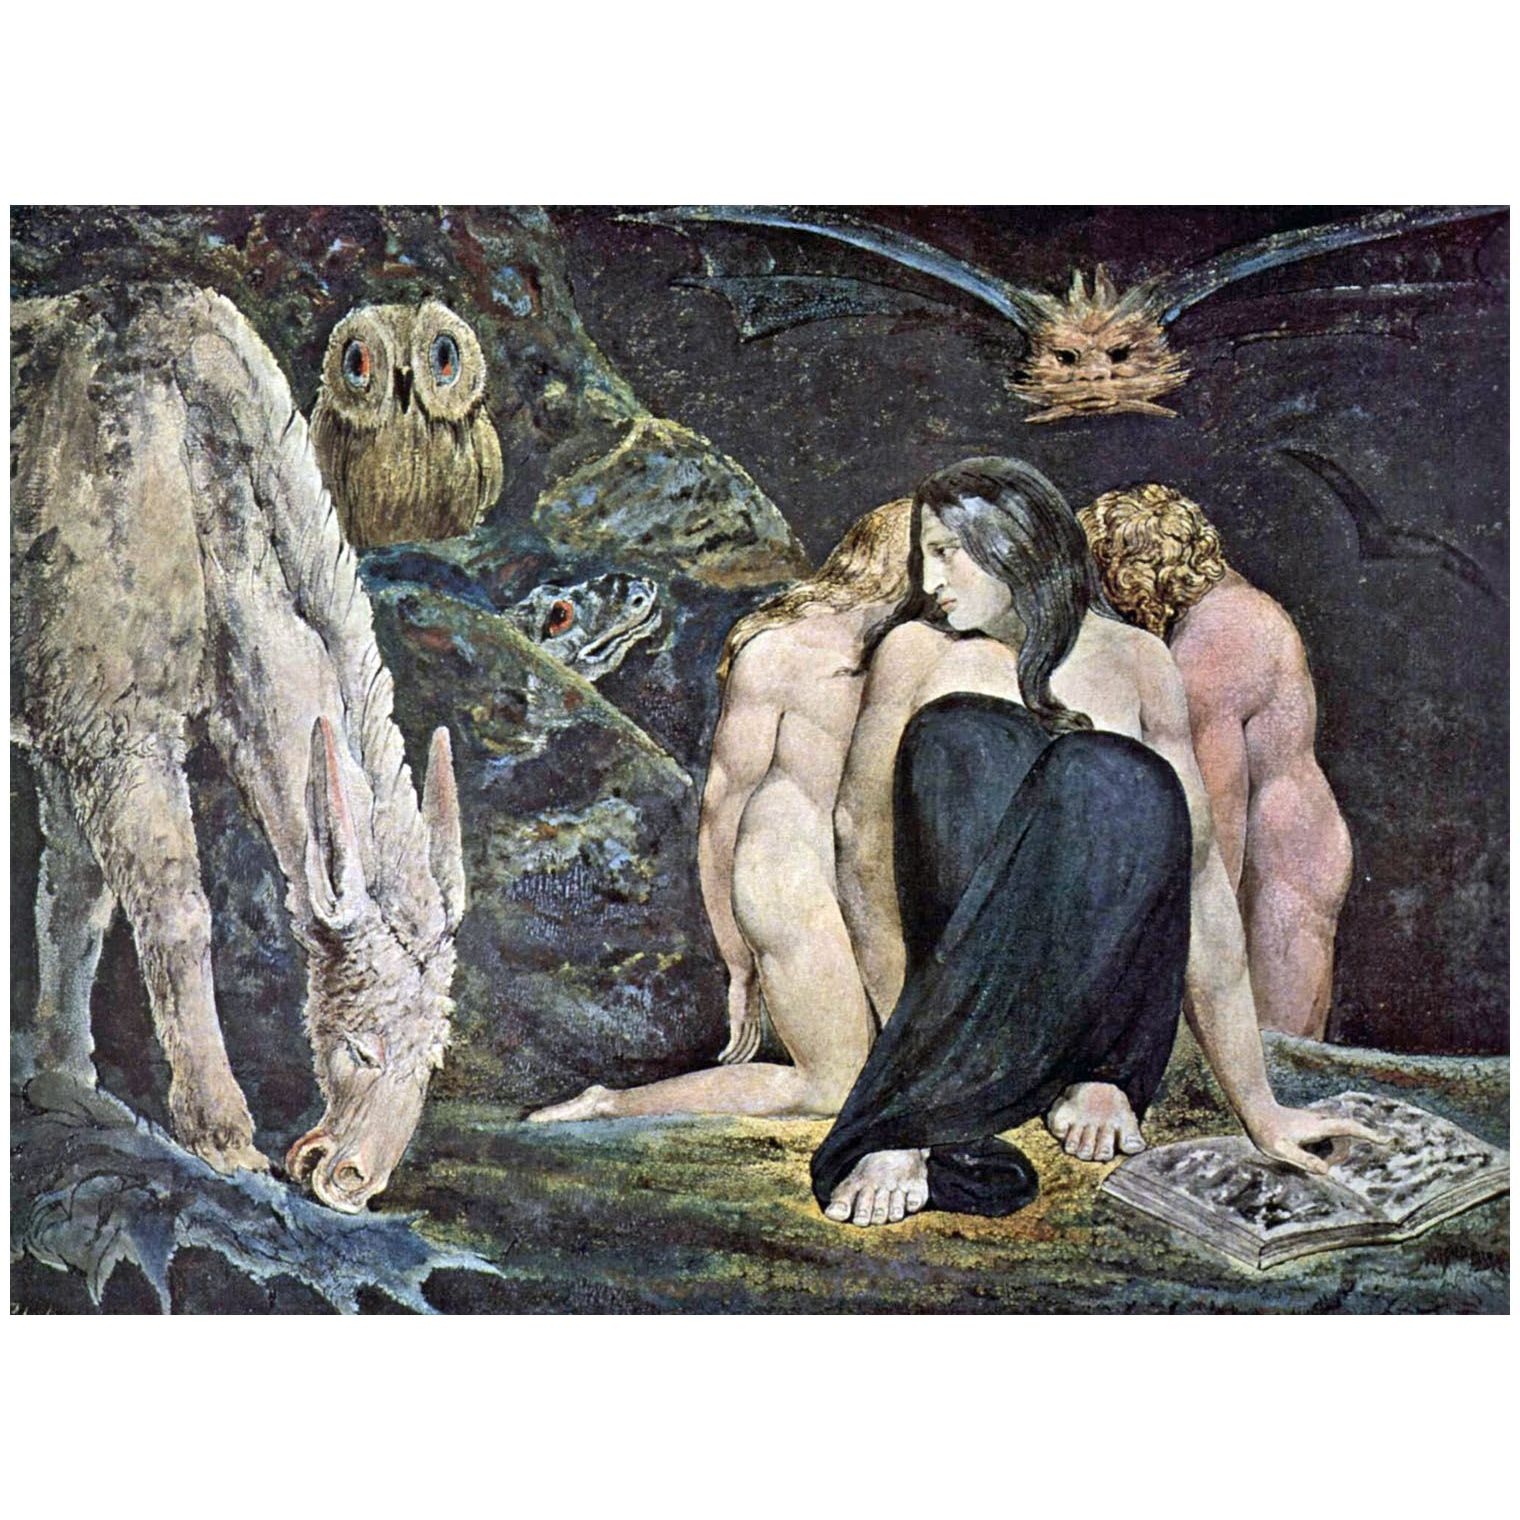 William Blake. Hecate. The Night of Enitharmon's Joy. 1795. Tate Britain